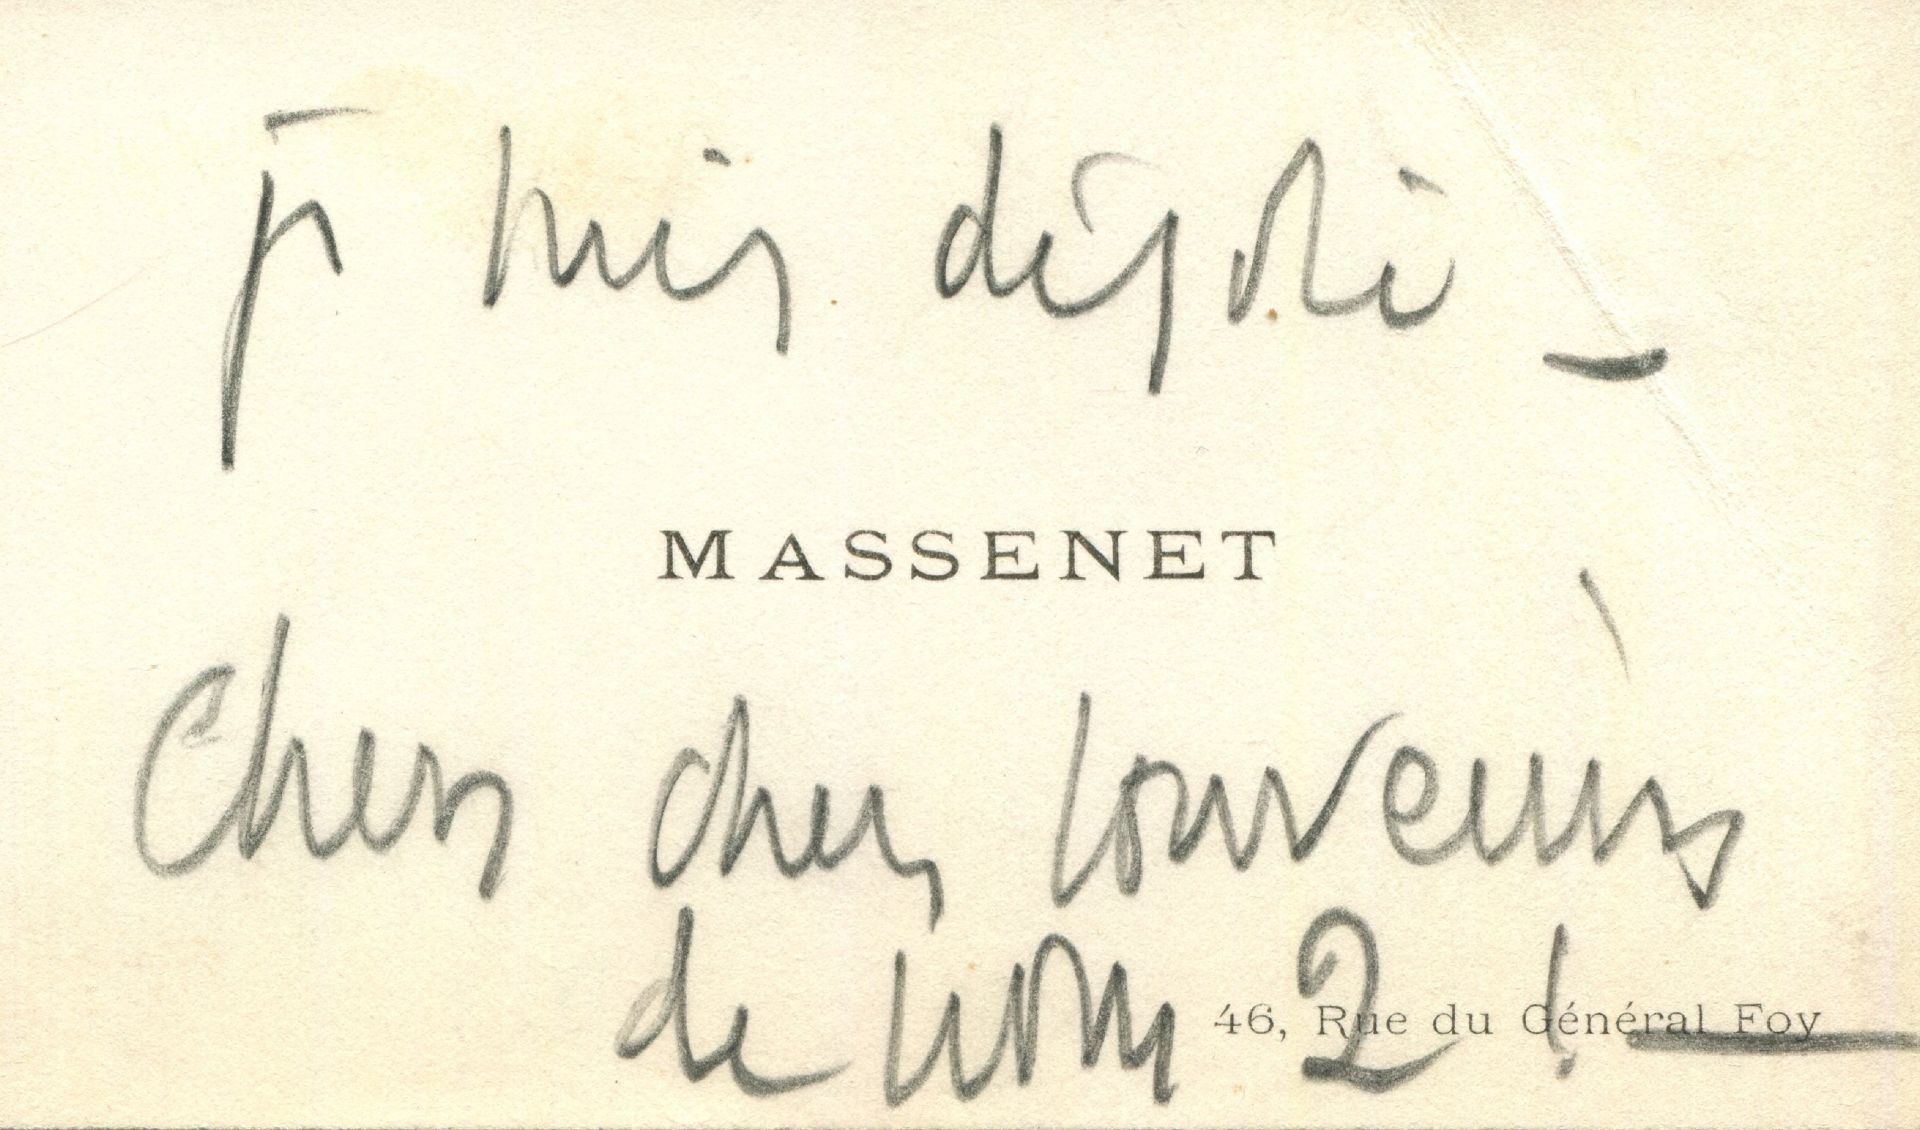 MASSENET JULES: (1842-1912) French composer of the Romantic era.